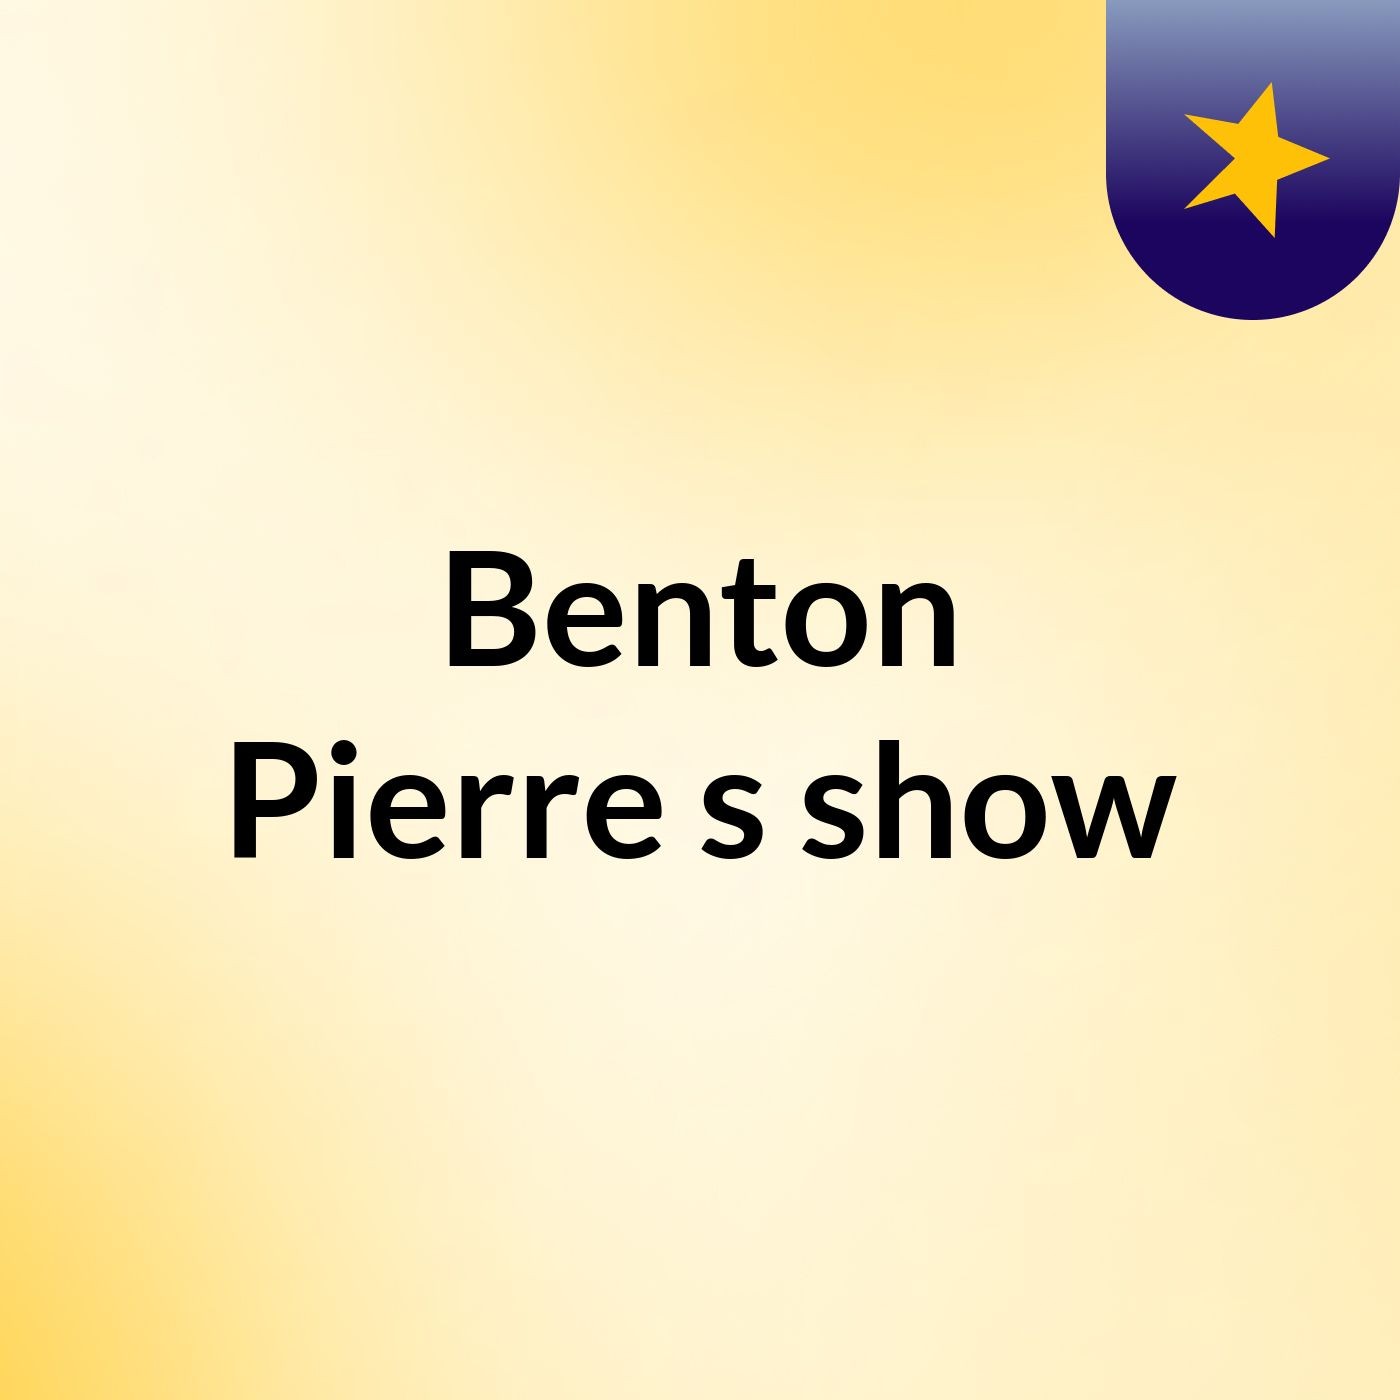 Episode 2 - Benton Pierre's show